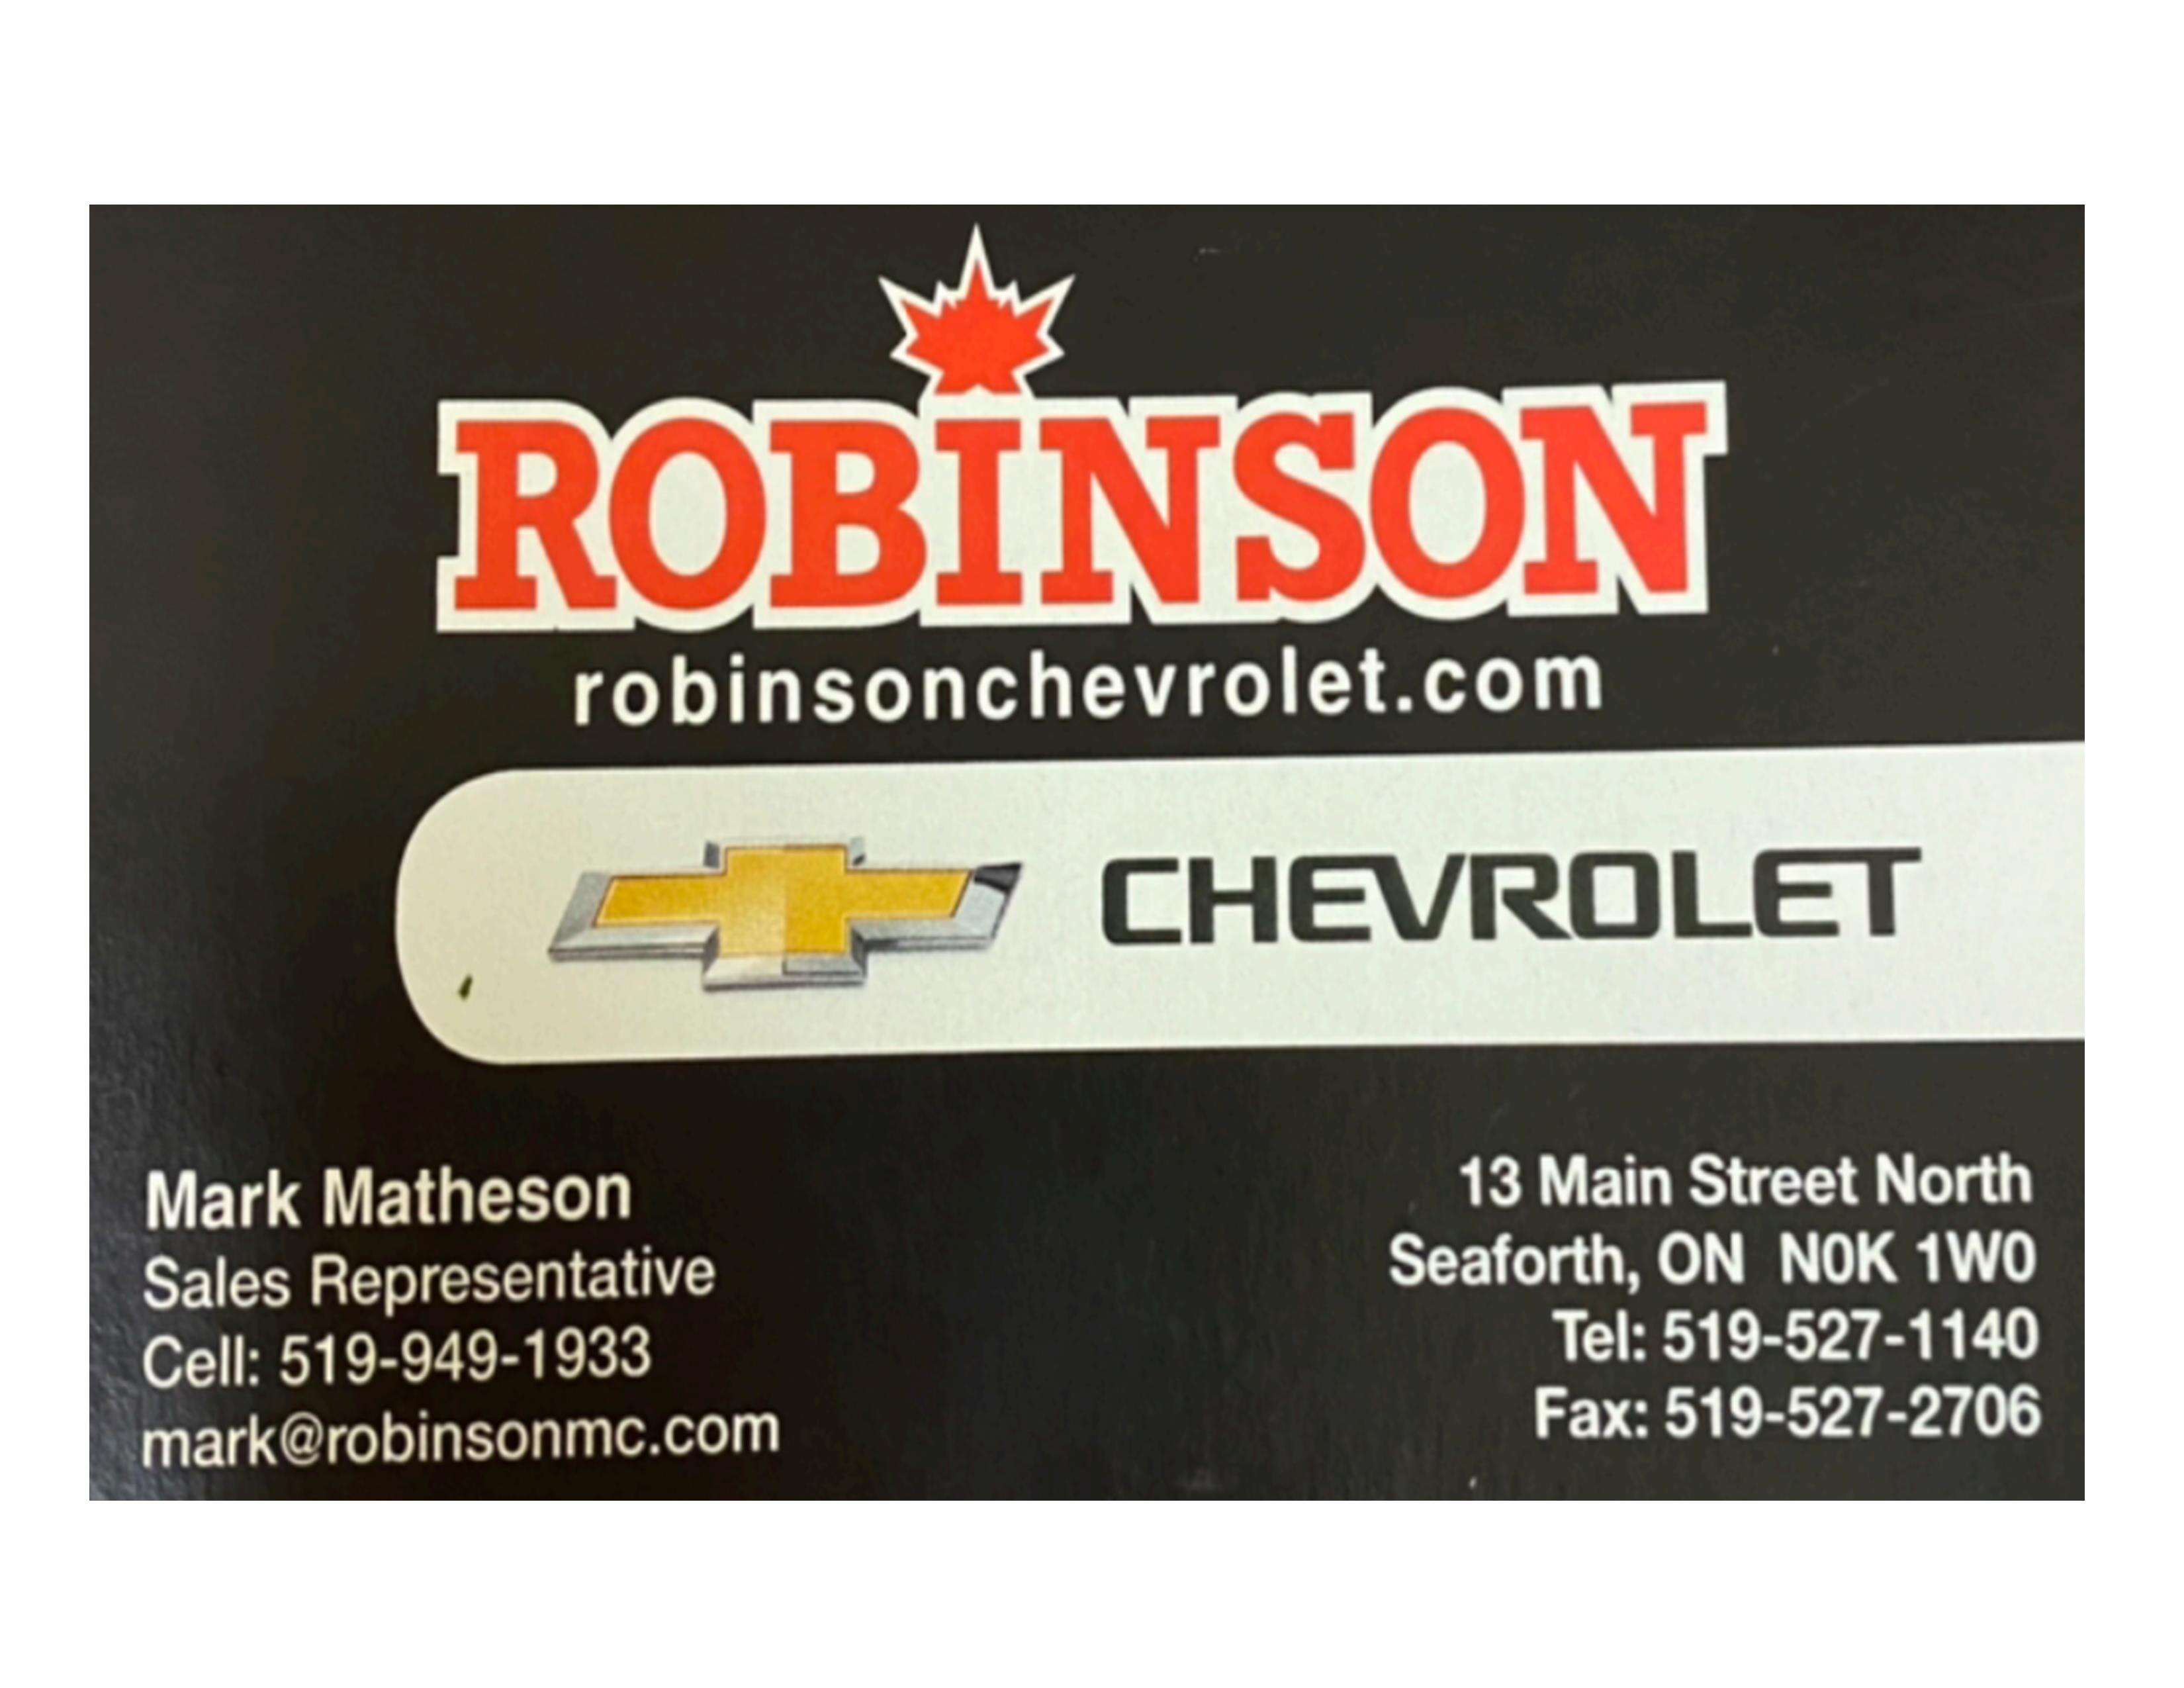 Robinson Chevrolet